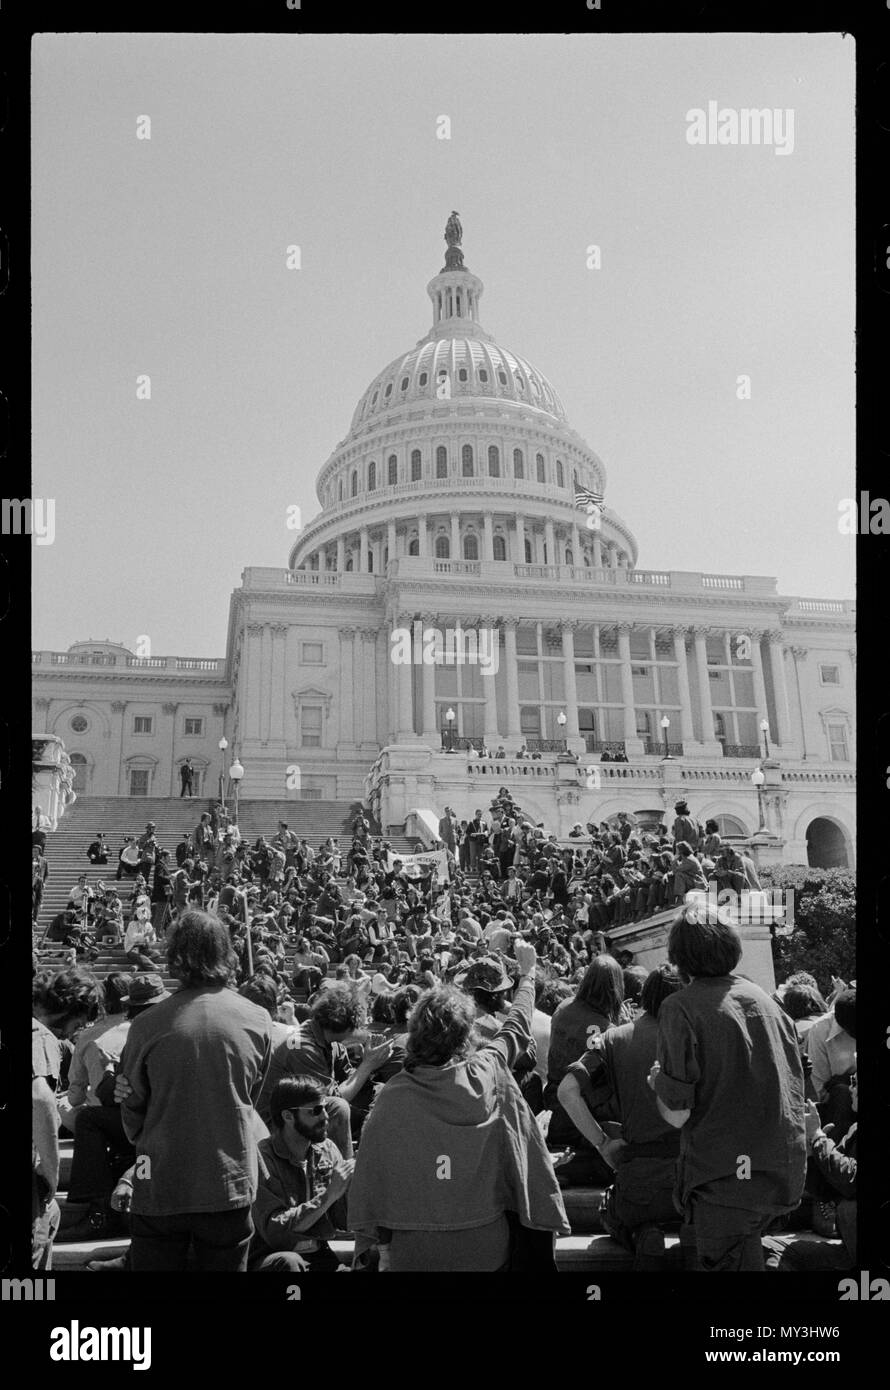 Hundreds of Vietnam veterans at the U S Capitol demonstrate against the Vietnam War, Washington, DC, 4/19/1971. Photo by Marion S. Trikosko. Stock Photo